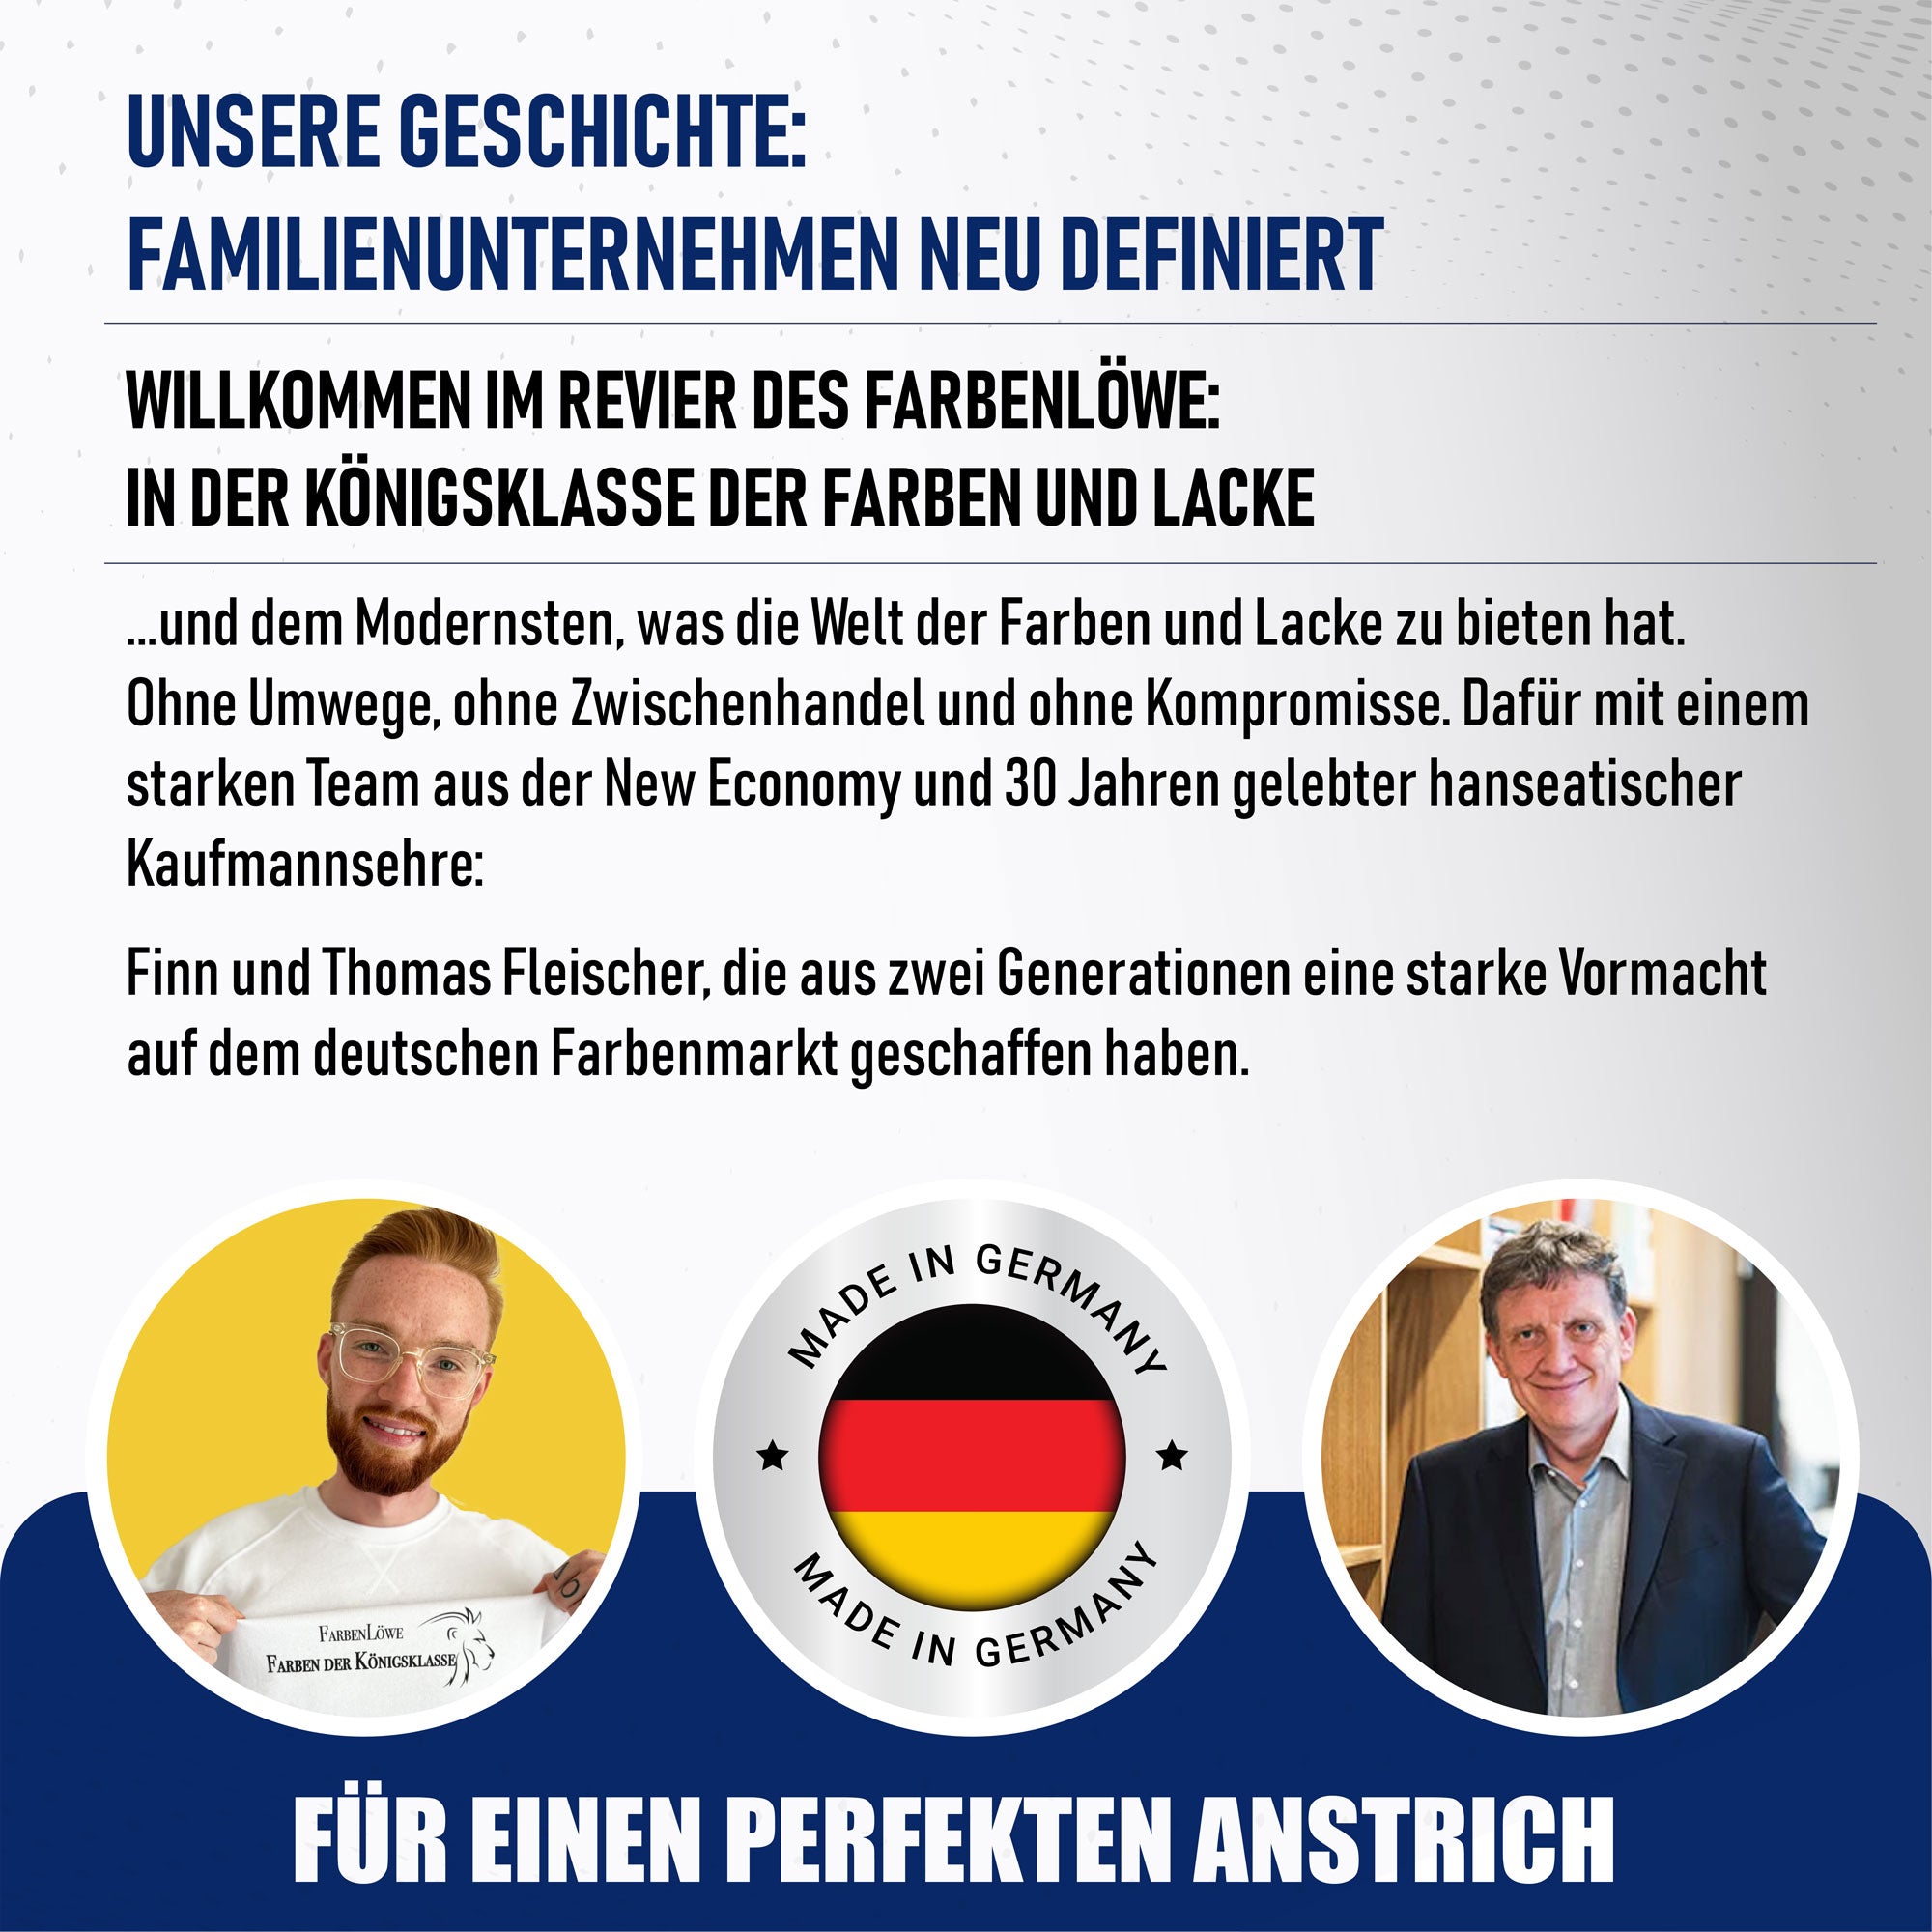 Hamburger Lack-Profi 2K Autolack in Khakigrau RAL 7008 mit Lackierset (X300) & Verdünnung (1 L) - 30% Sparangebot